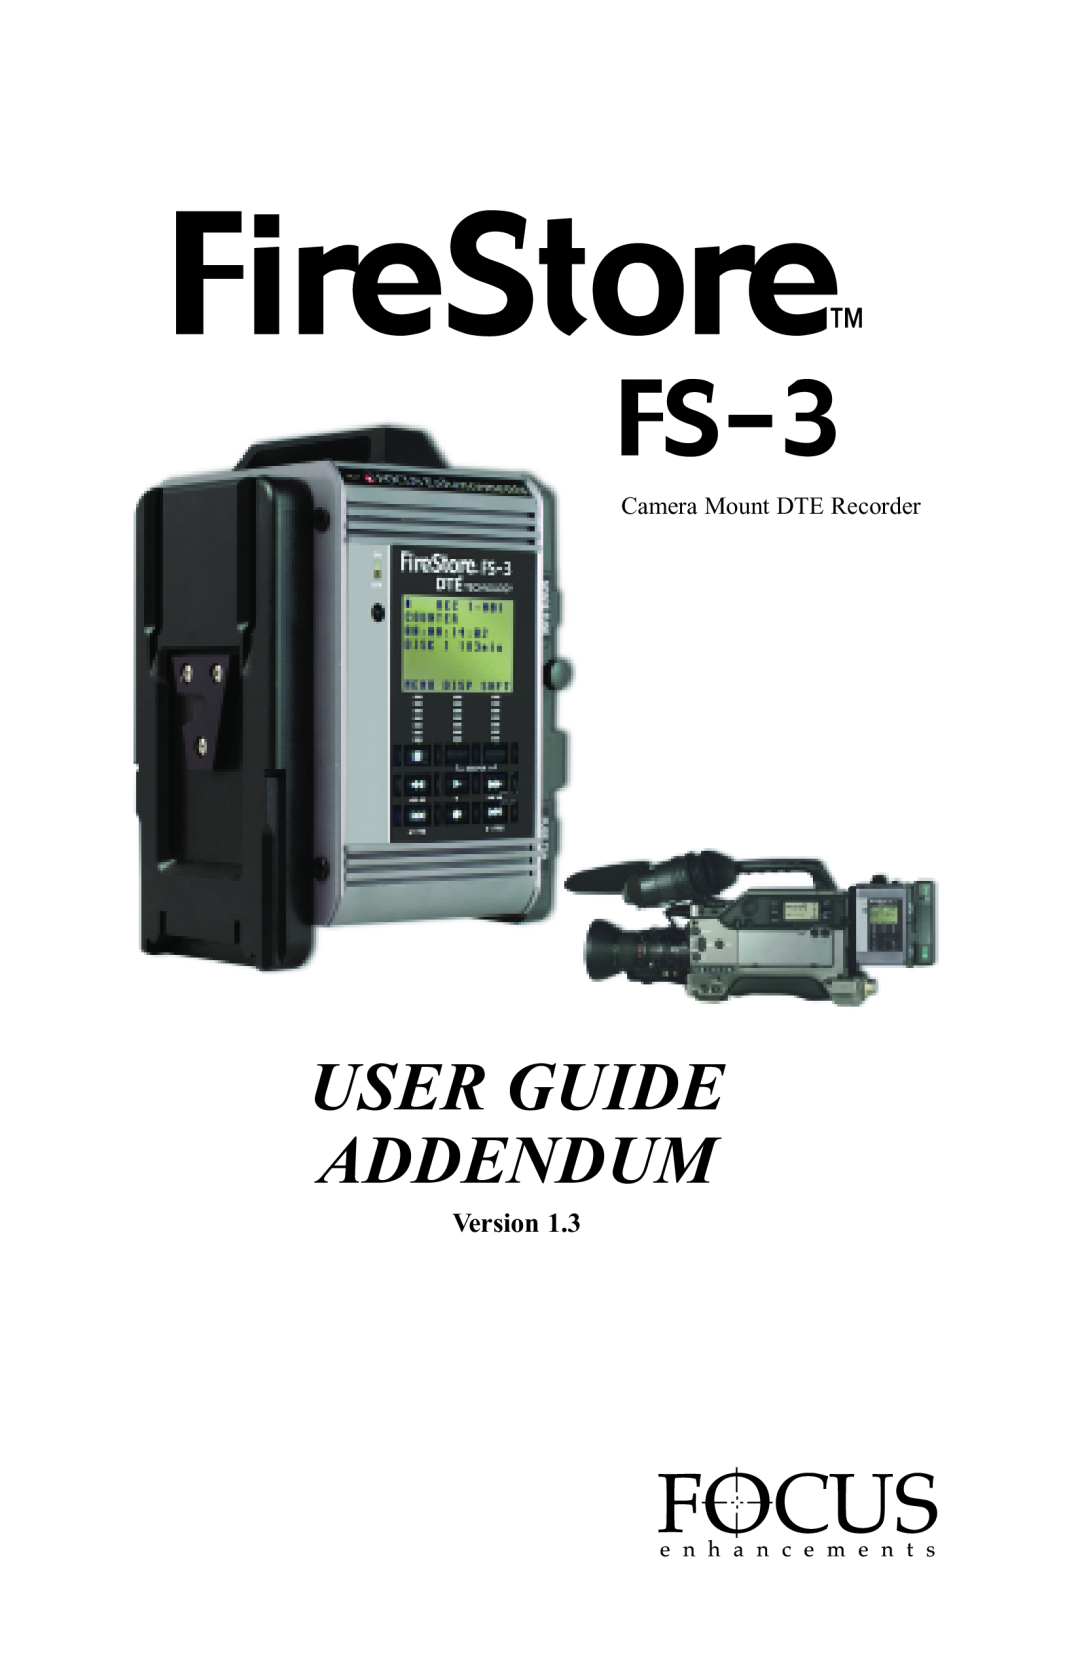 FOCUS Enhancements FS-3 manual User Guide Addendum, Version 